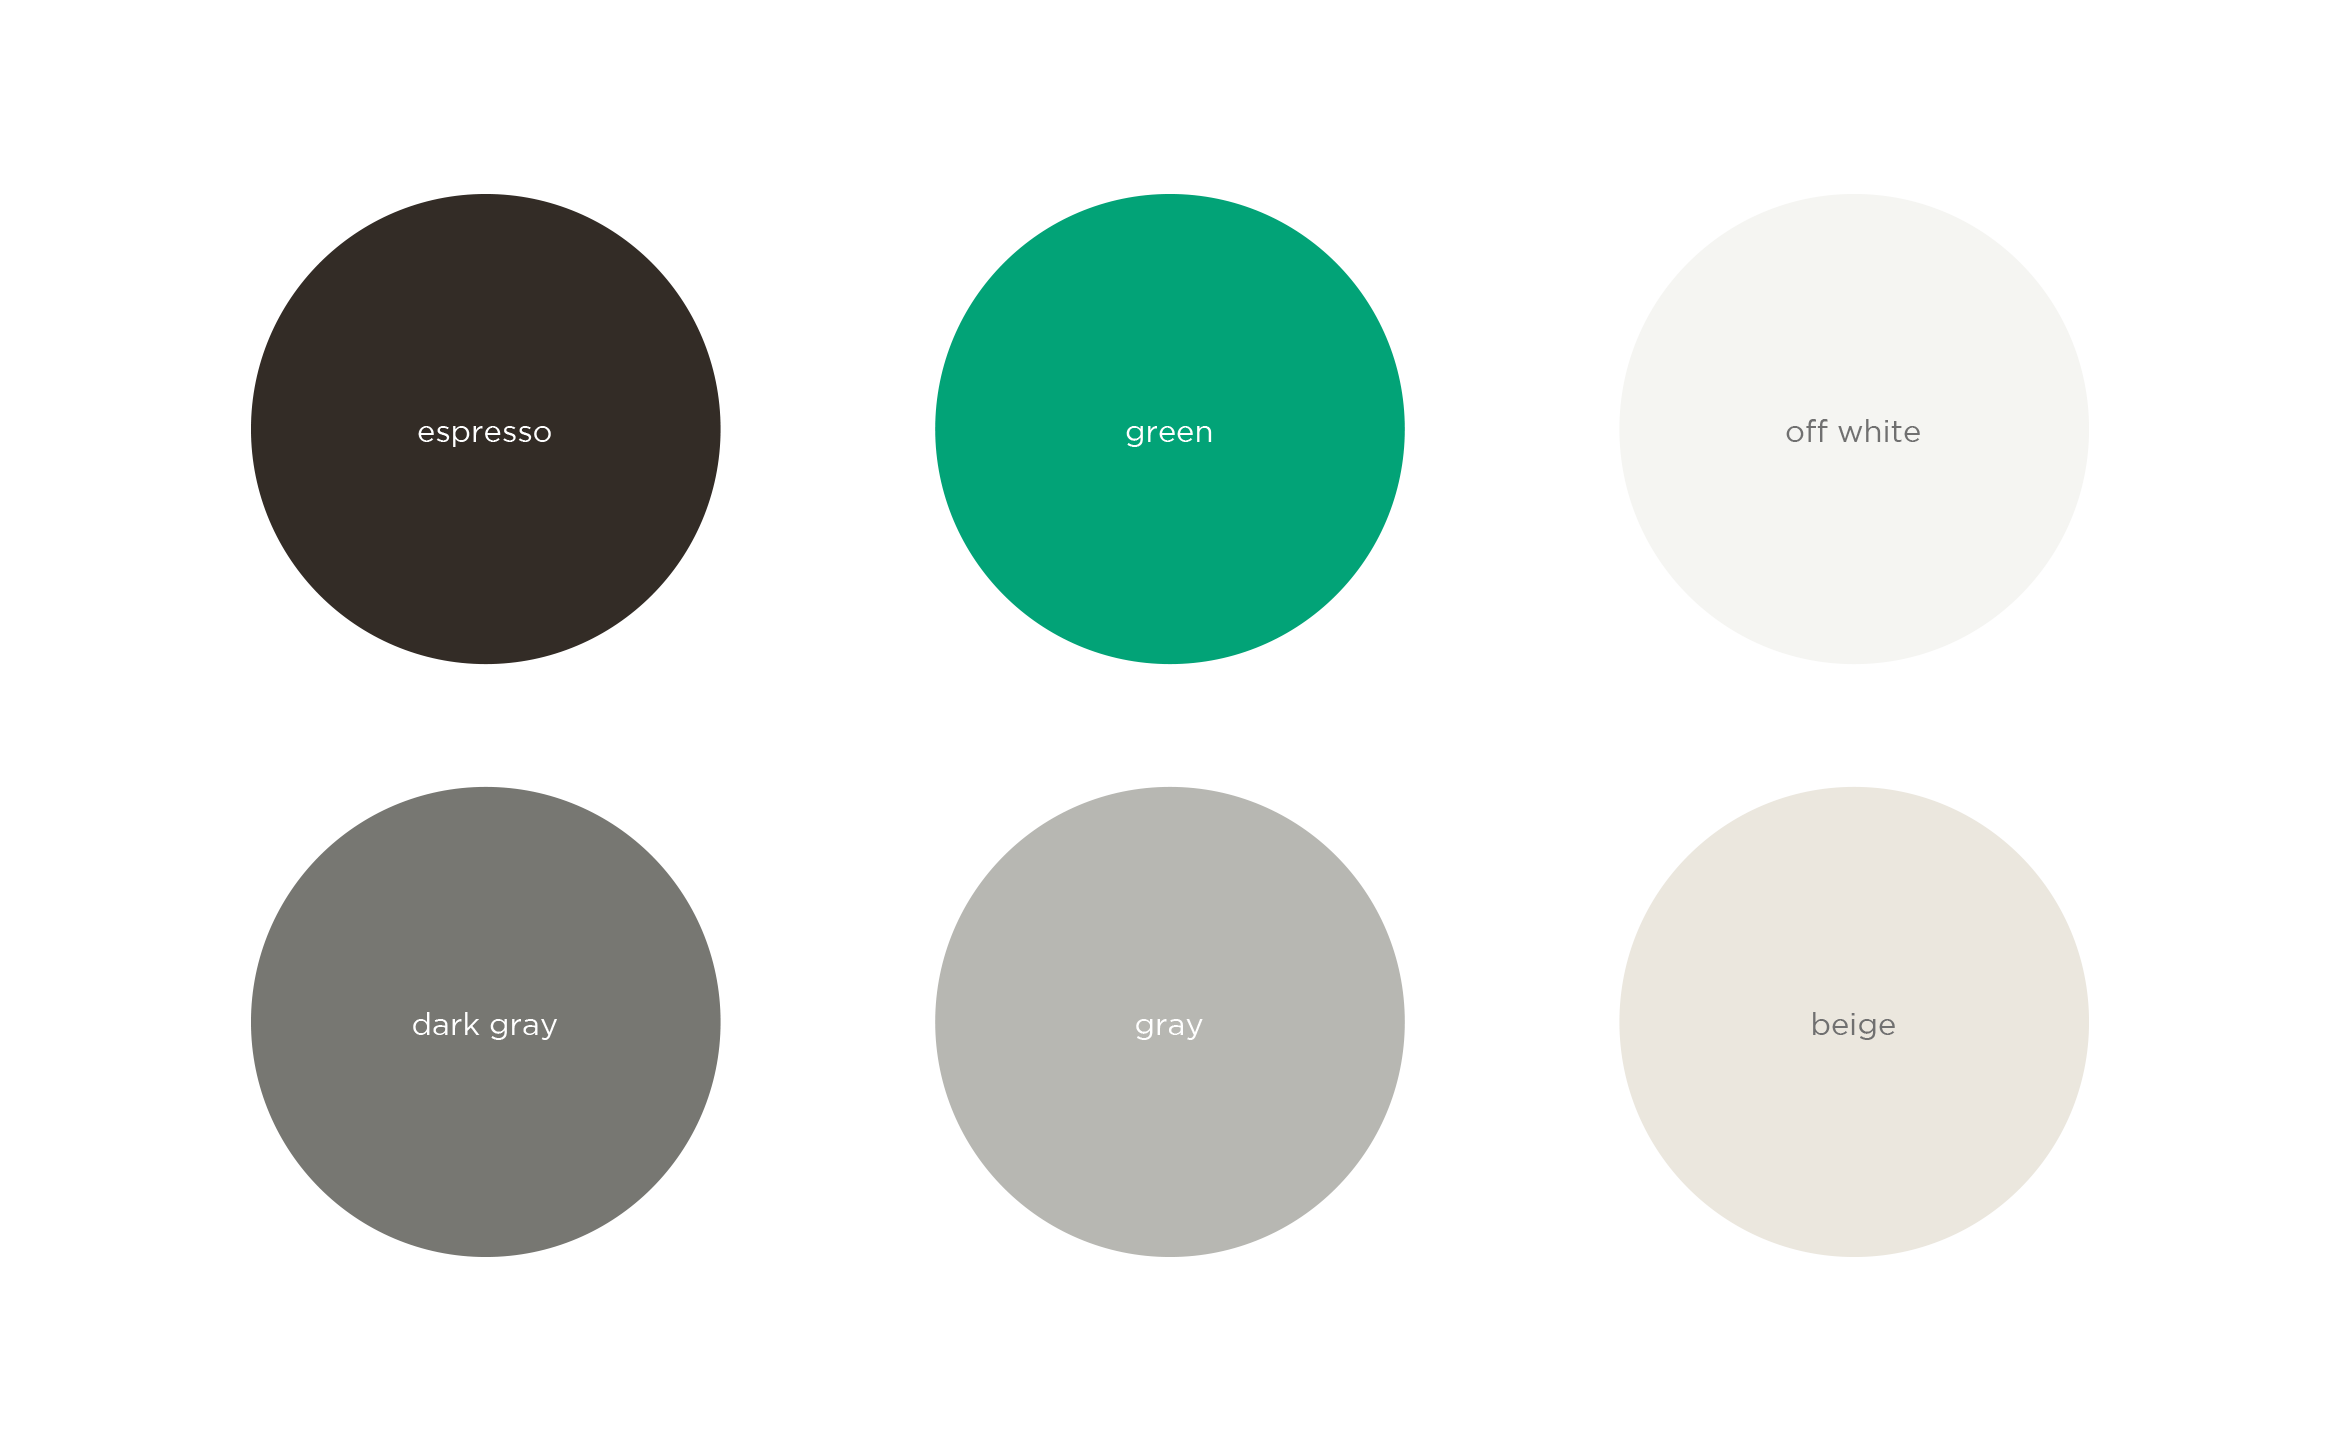 hughes estate sales brand color palette: espresso, green, grays, beige and off white